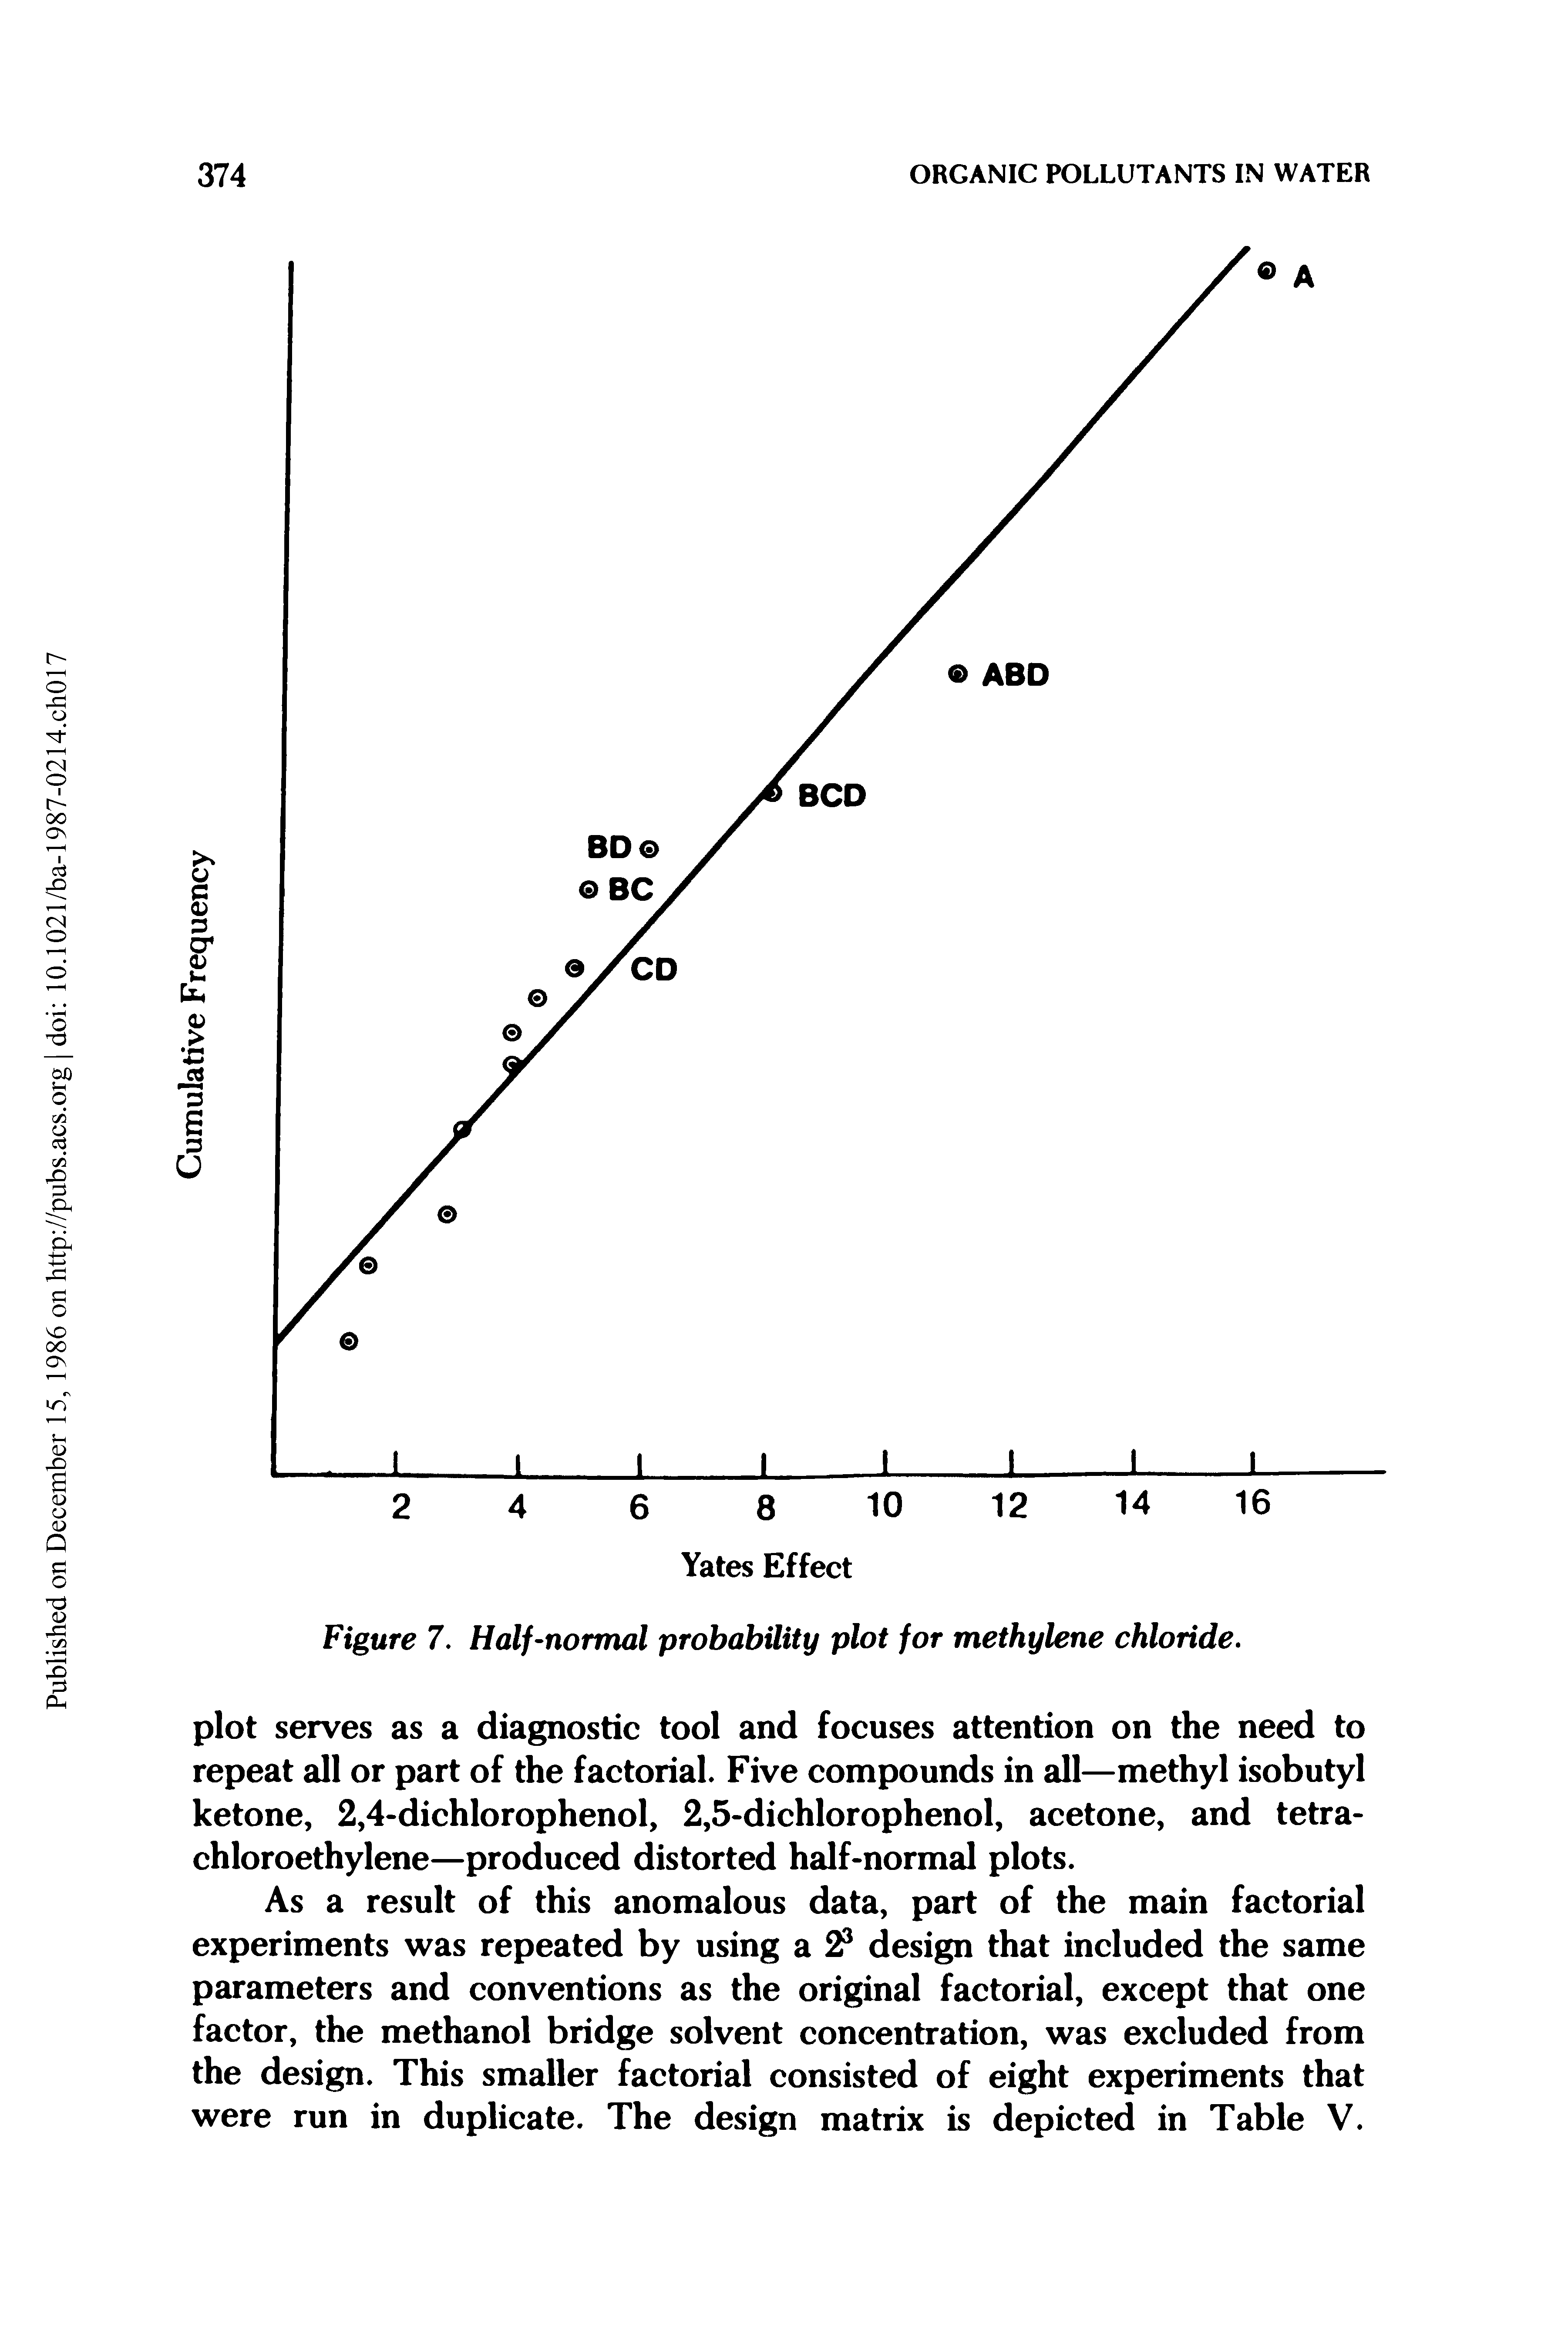 Figure 7. Half-normal probability plot for methylene chloride.